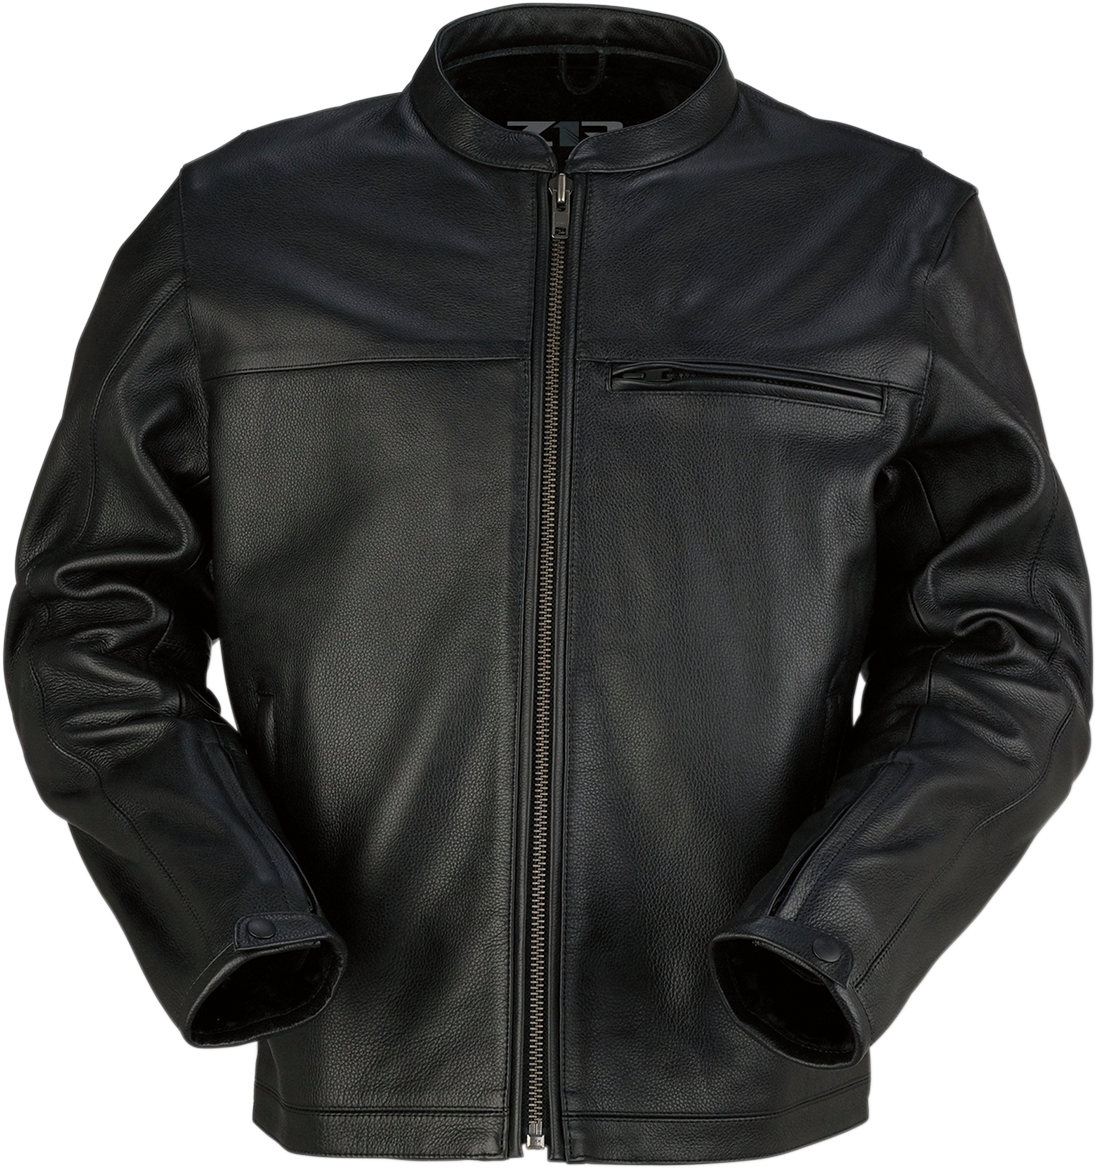 Z1R Munition Leather Jacket - Black - Large 2810-3483